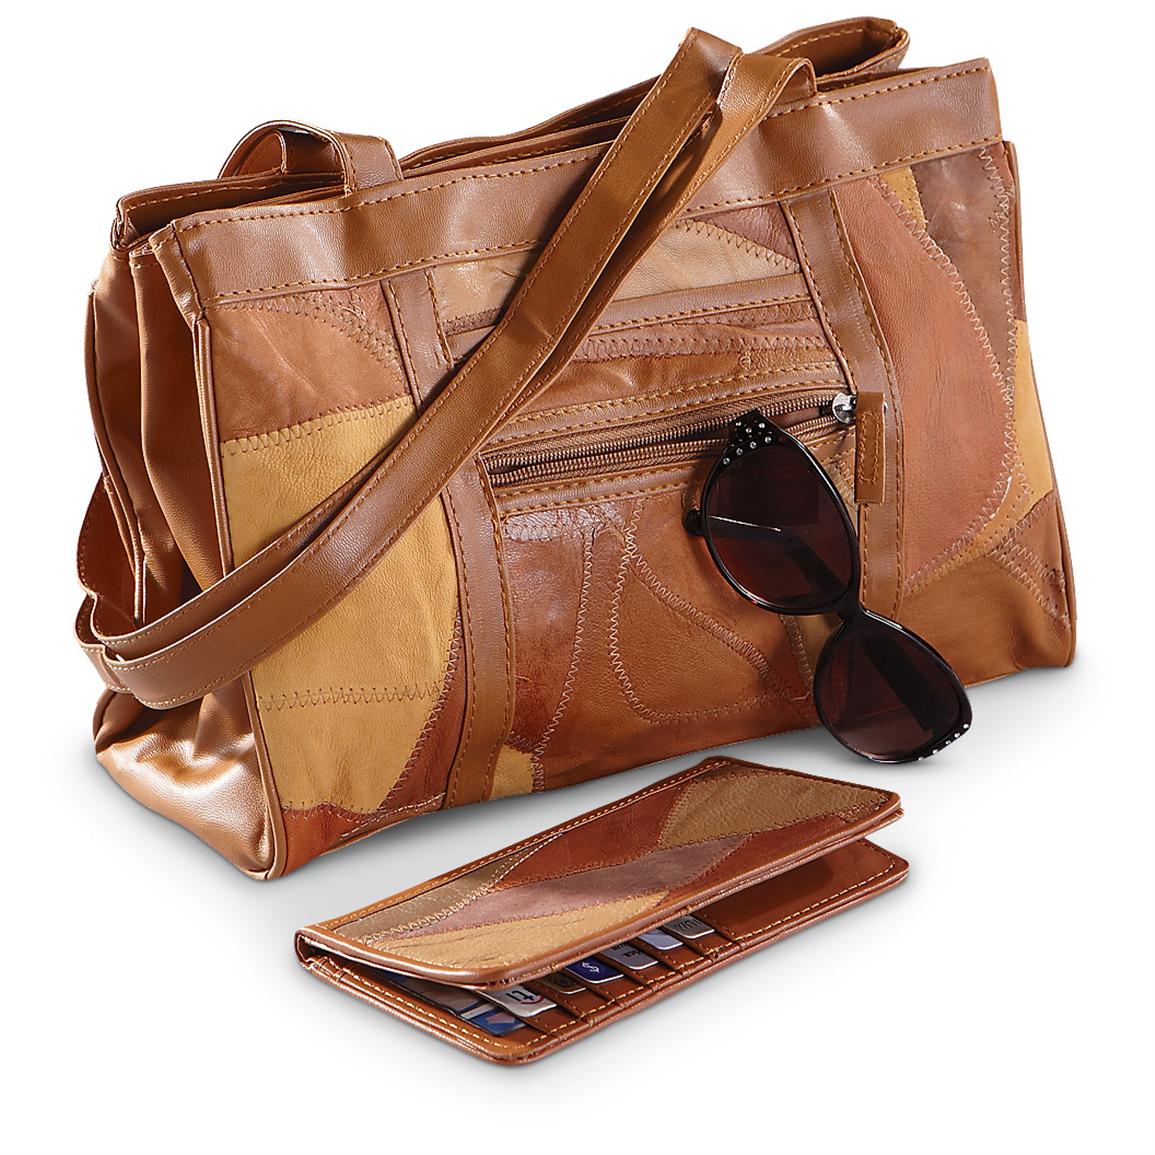 2 - Pc. Leather Purse / Wallet Set, Brown - 211449, Purses & Handbags at Sportsman&#39;s Guide